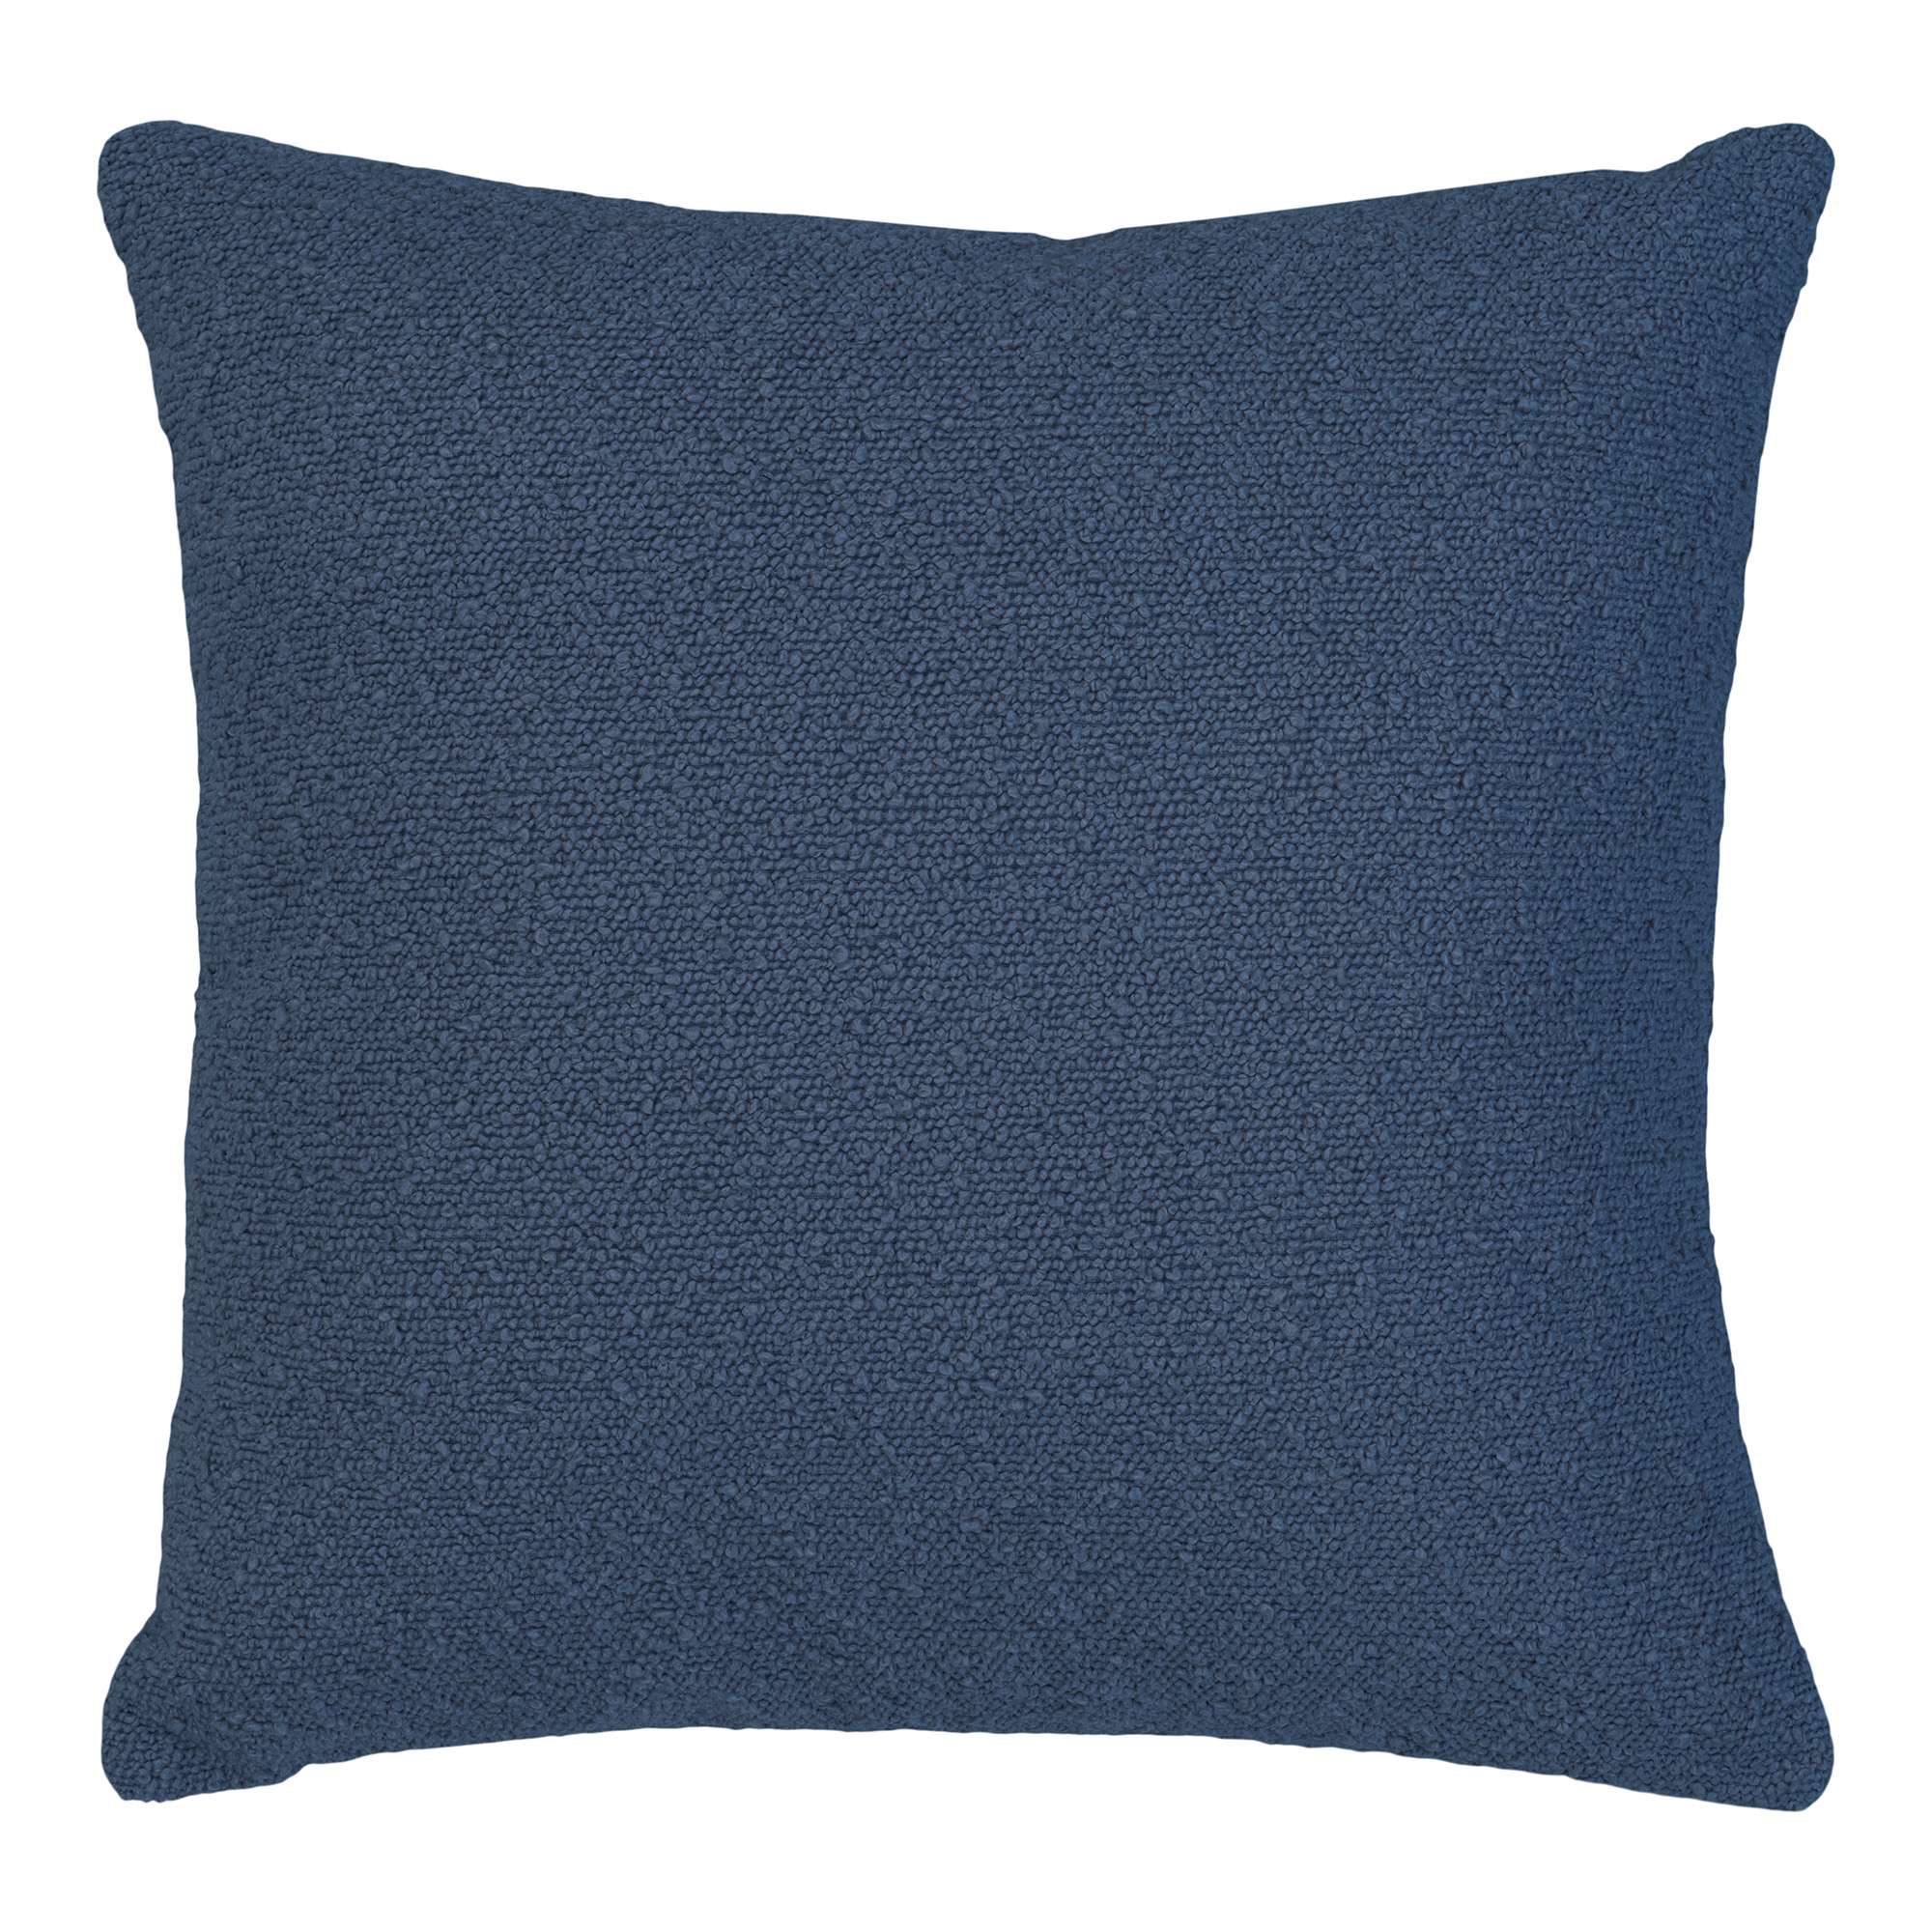 HOUSE NORDIC Savannah pude, kvadratisk - blå bouclé polyester stof (45x45)